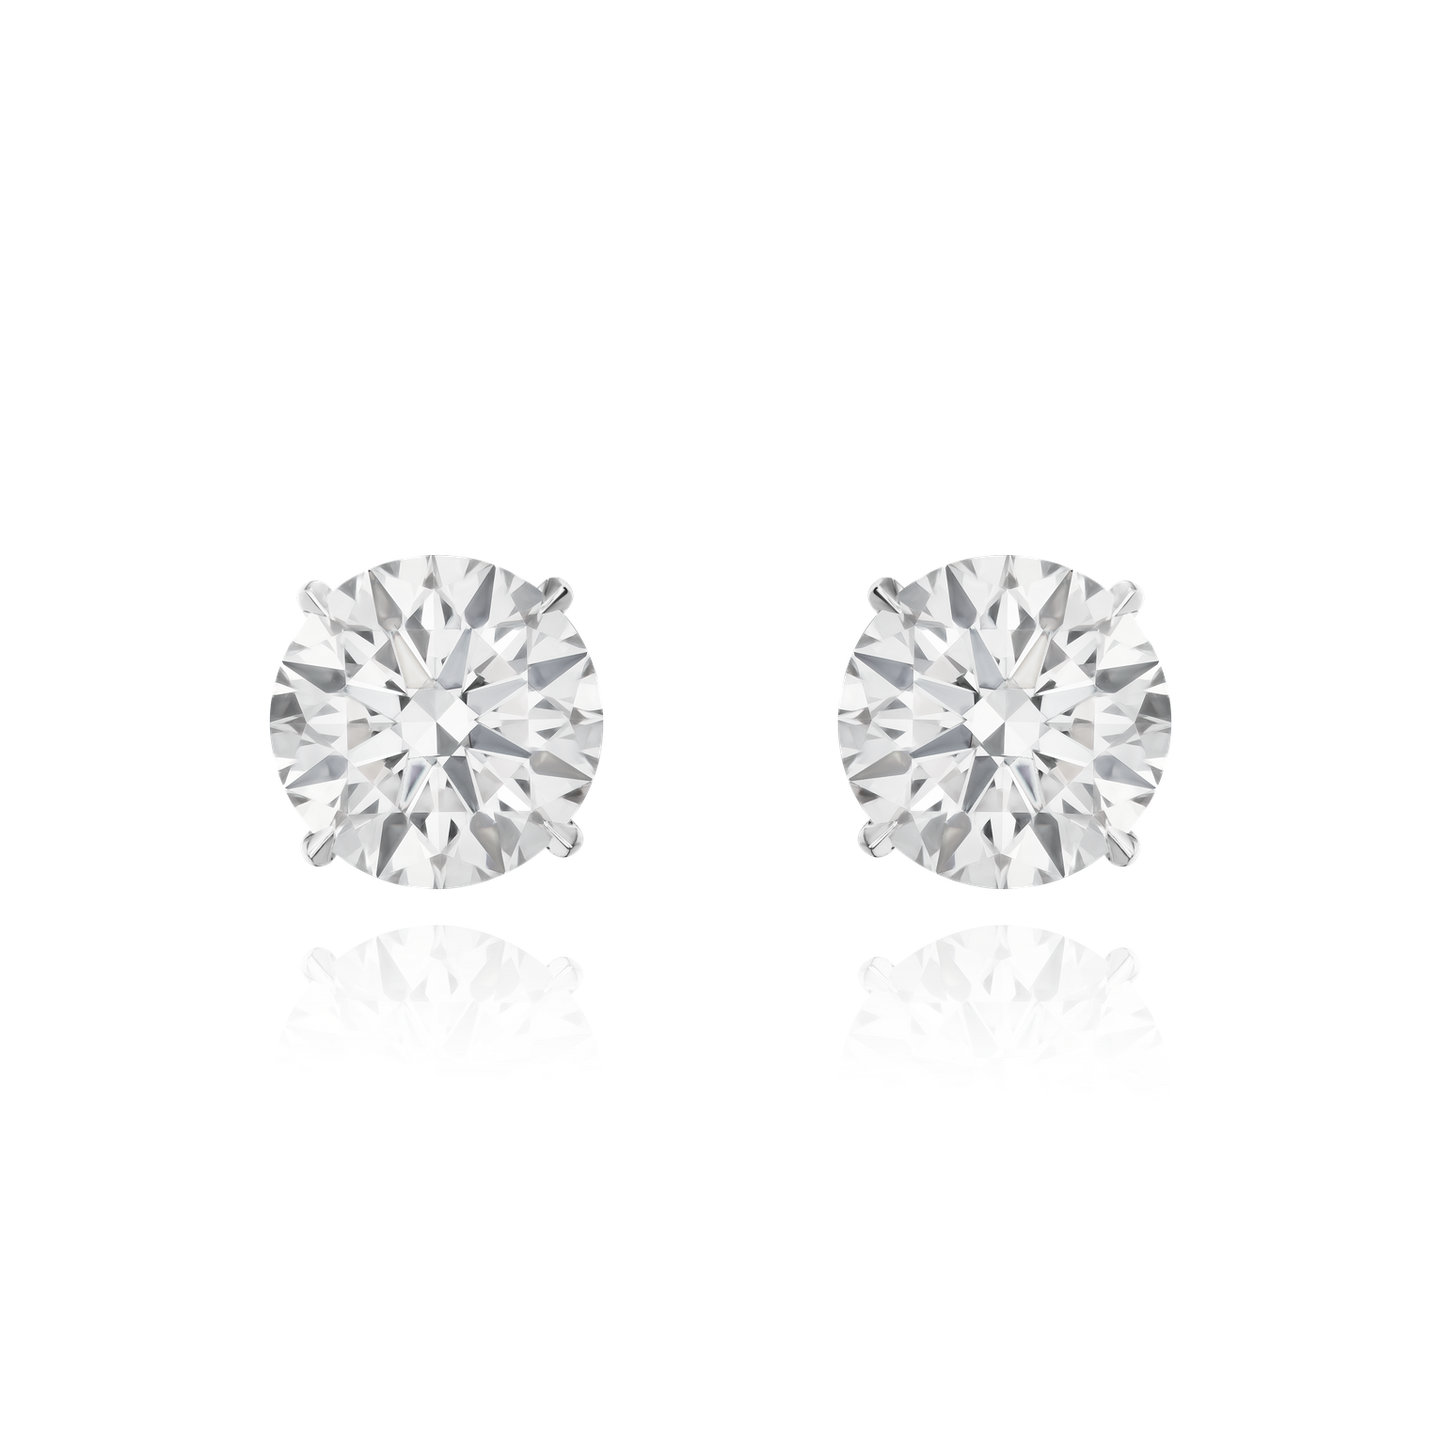 4.03cts Round Brilliant-Cut Diamond Earrings